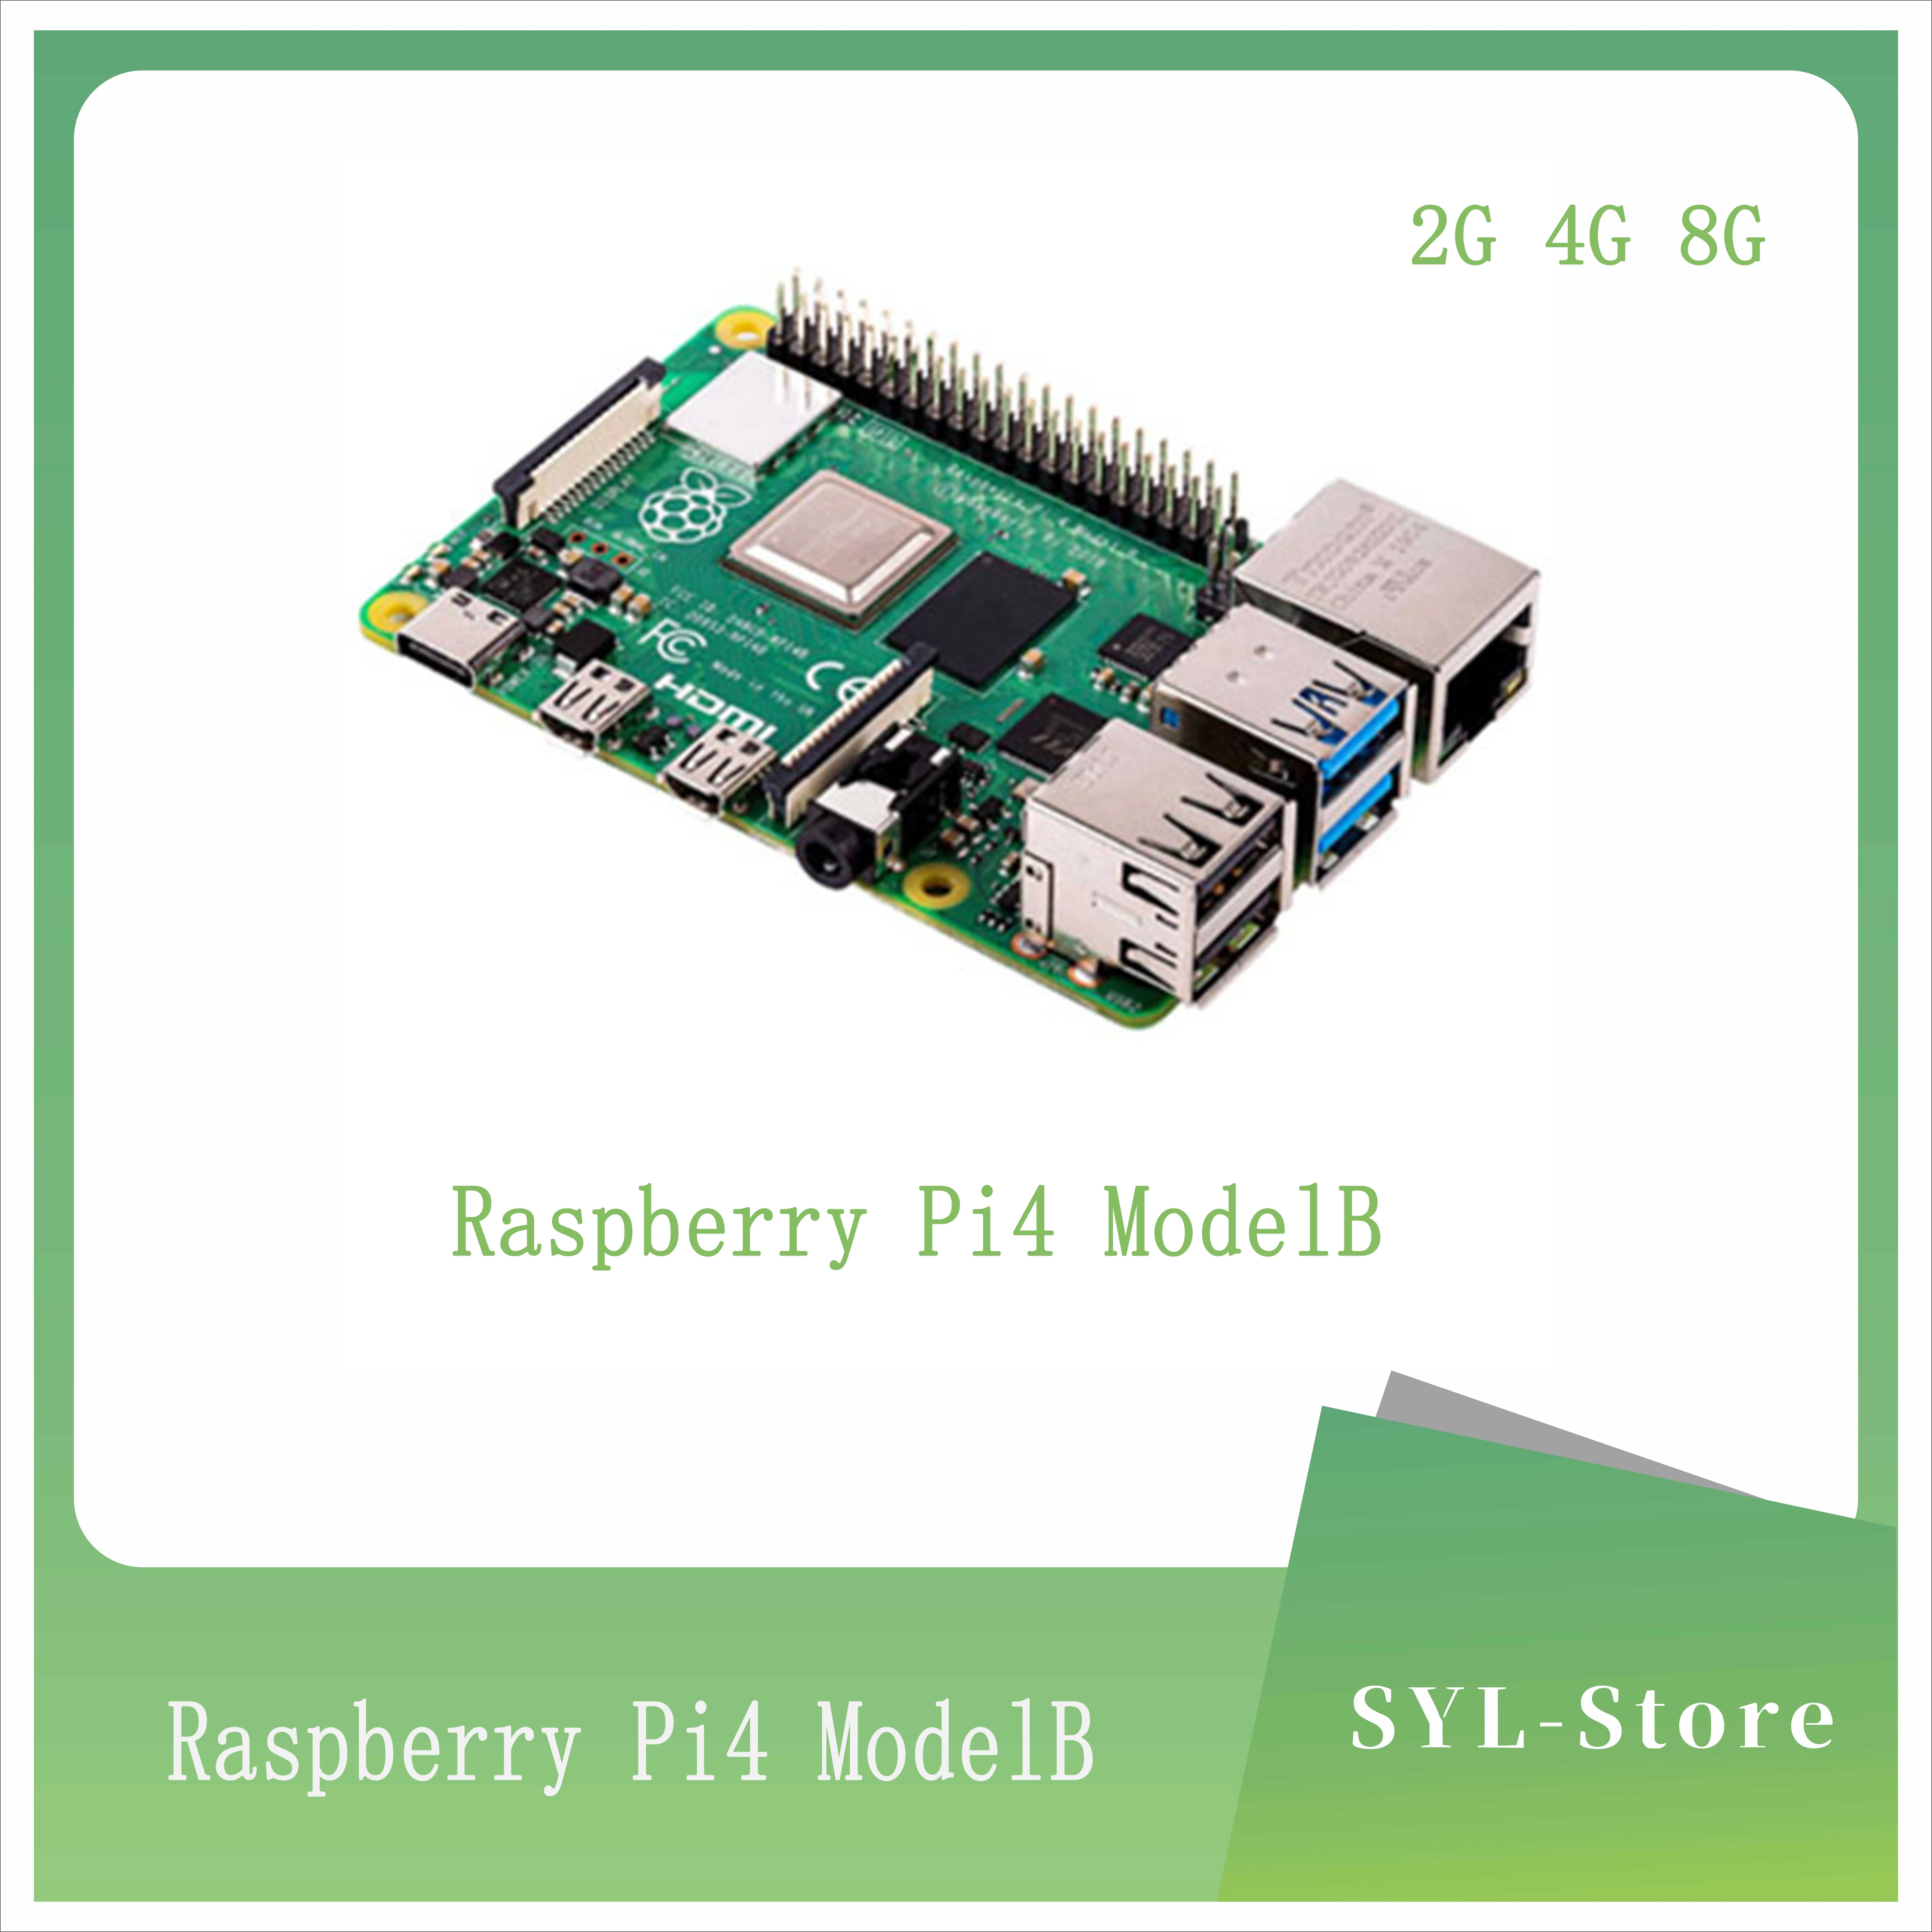 

Official Original Raspberry Pi 4 Model B Dev Board Kit RAM 2G 4G 8G 4 Core CPU 1.5Ghz 3 Speeder Than Pi 3B+